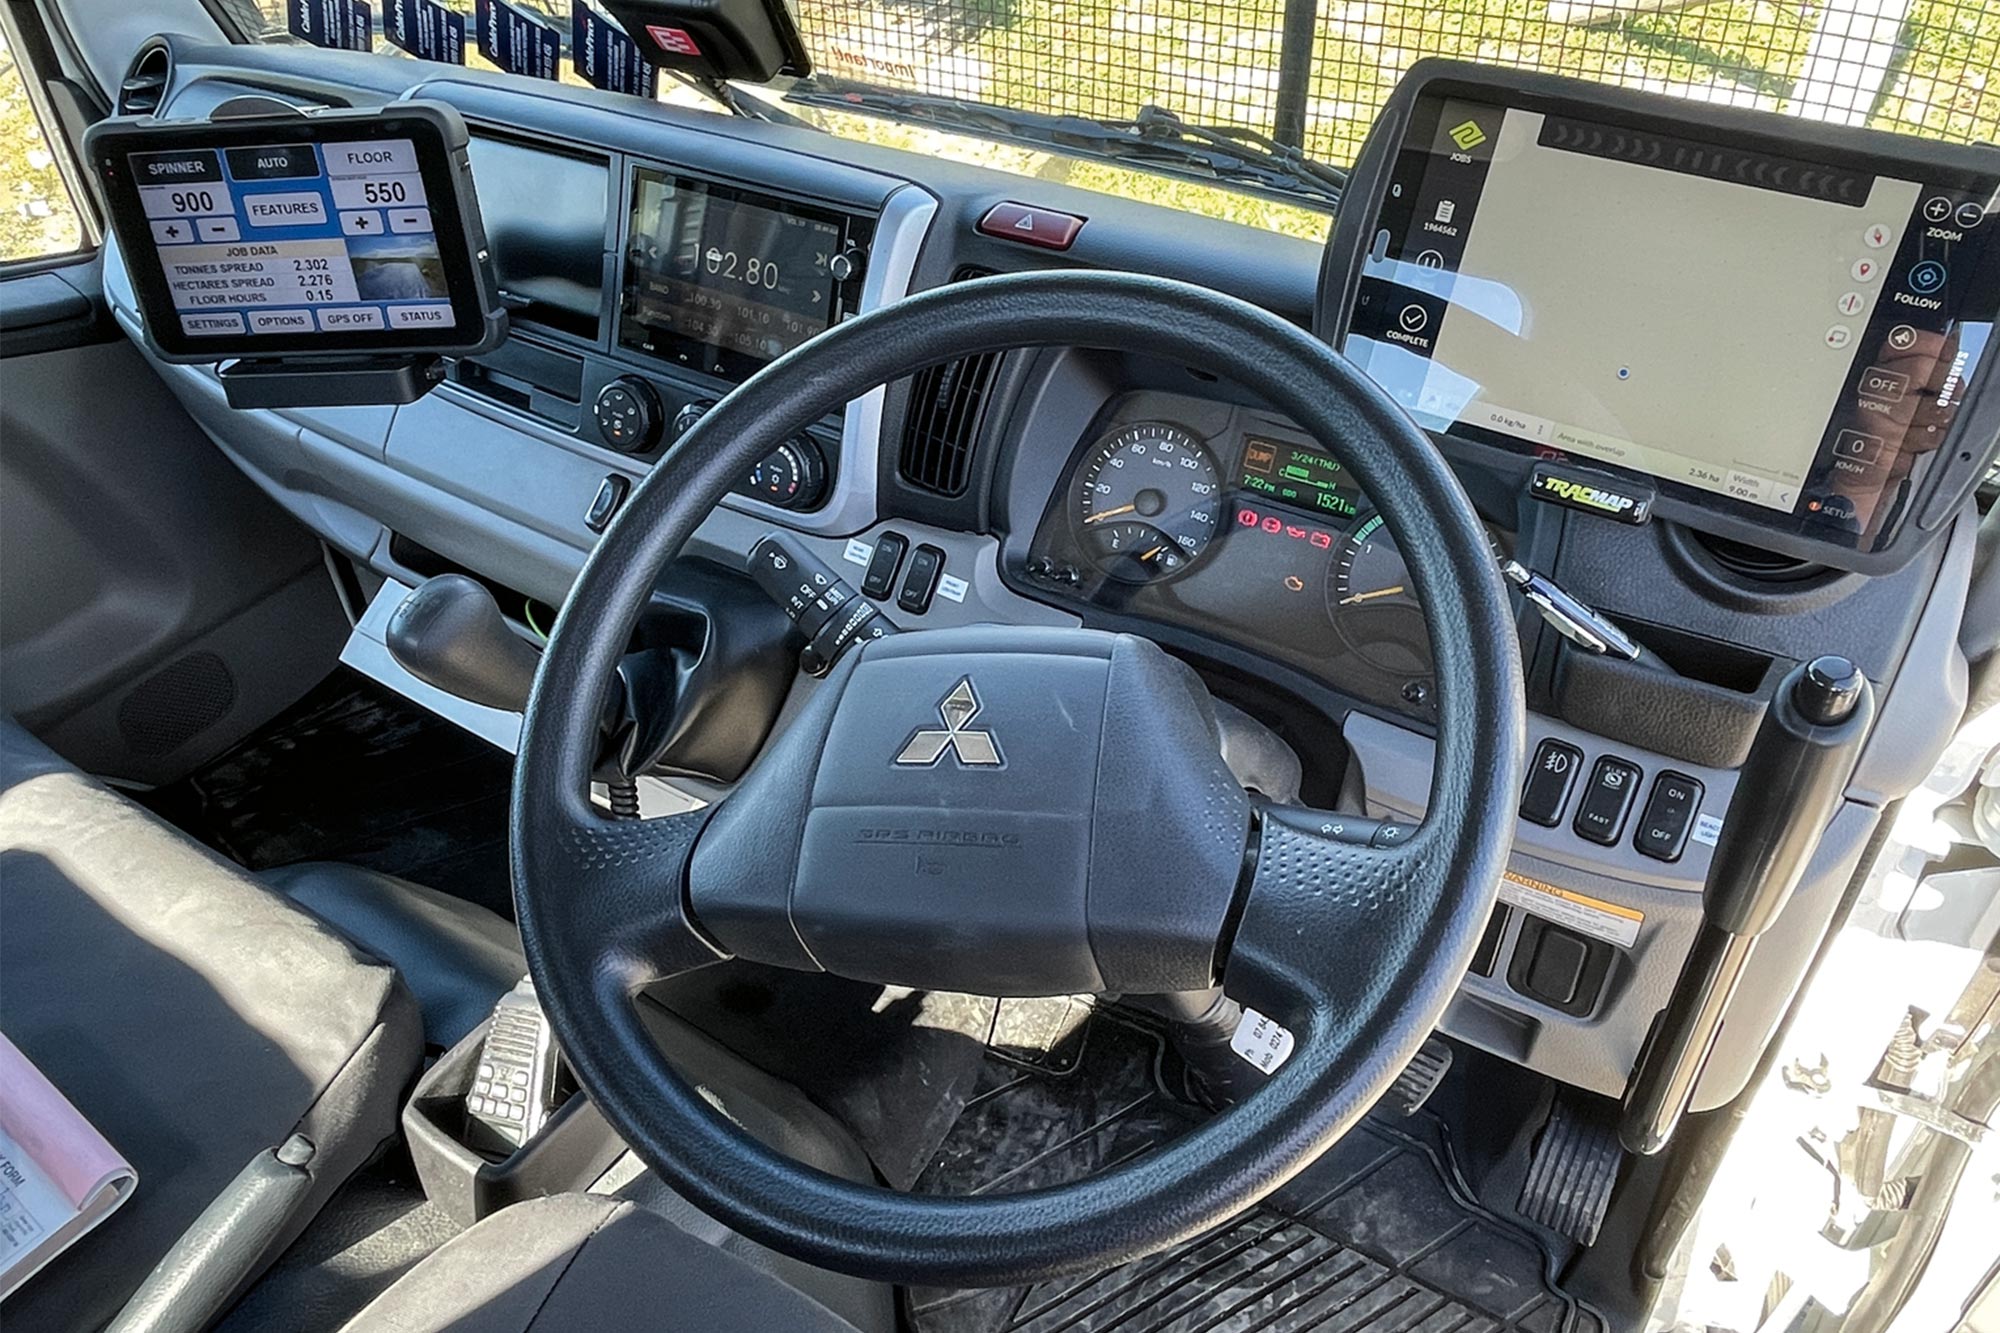 The FUSO Canter 616 City Cab has a high tech cockpit